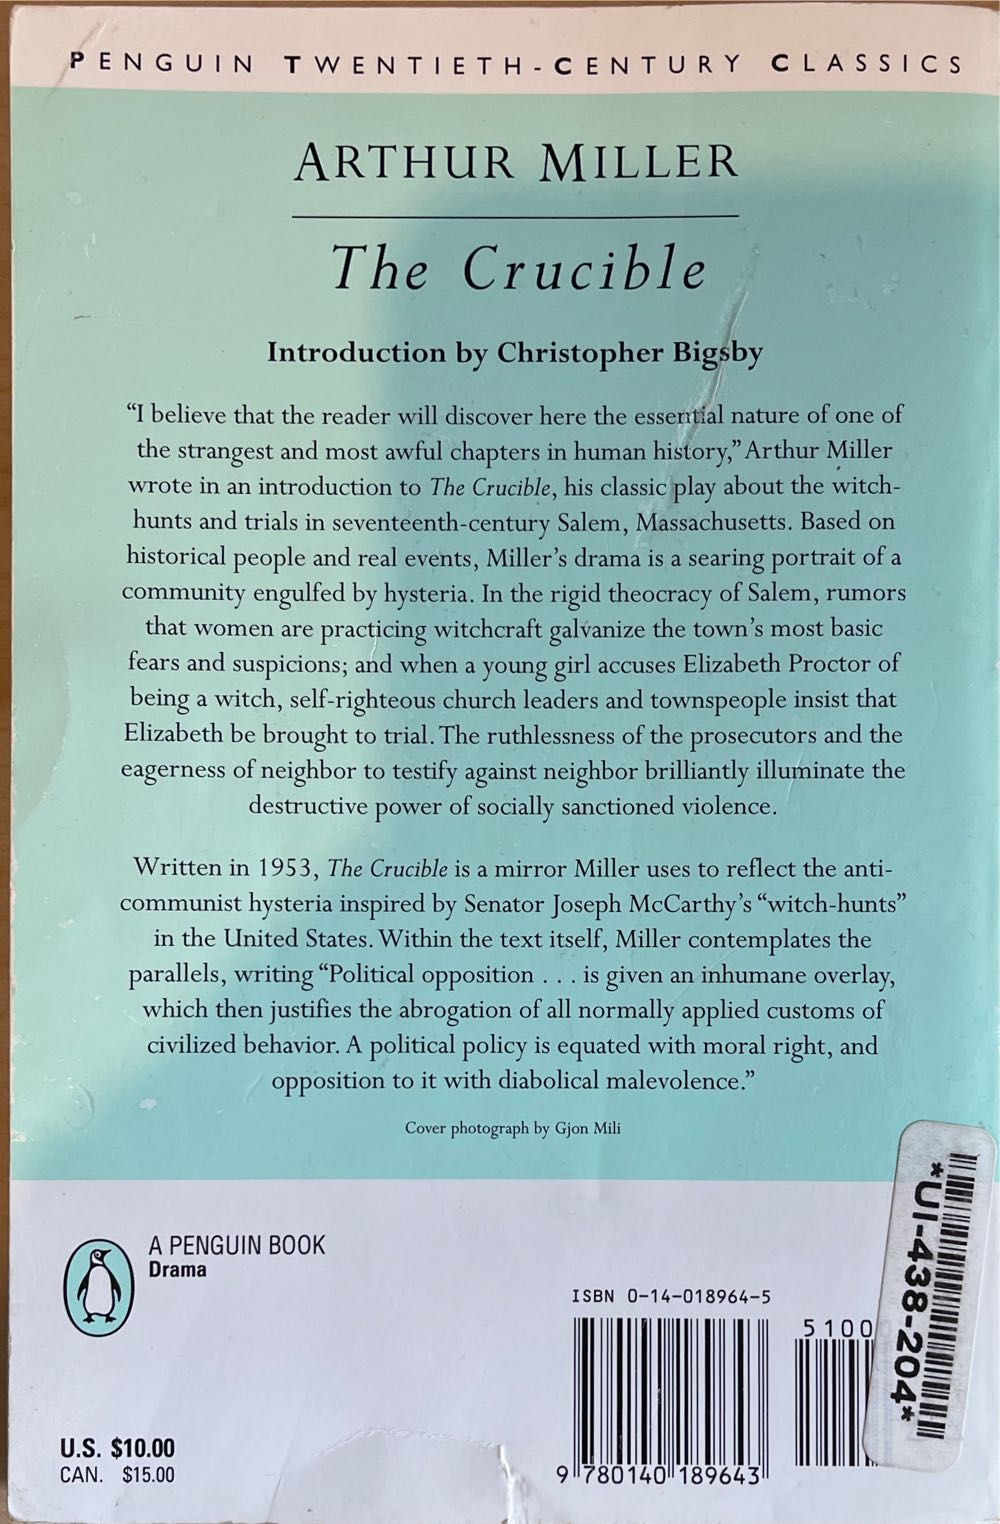 The Crucible - Arthur Miller (Penguin Books - Paperback) book collectible [Barcode 9780140189643] - Main Image 2